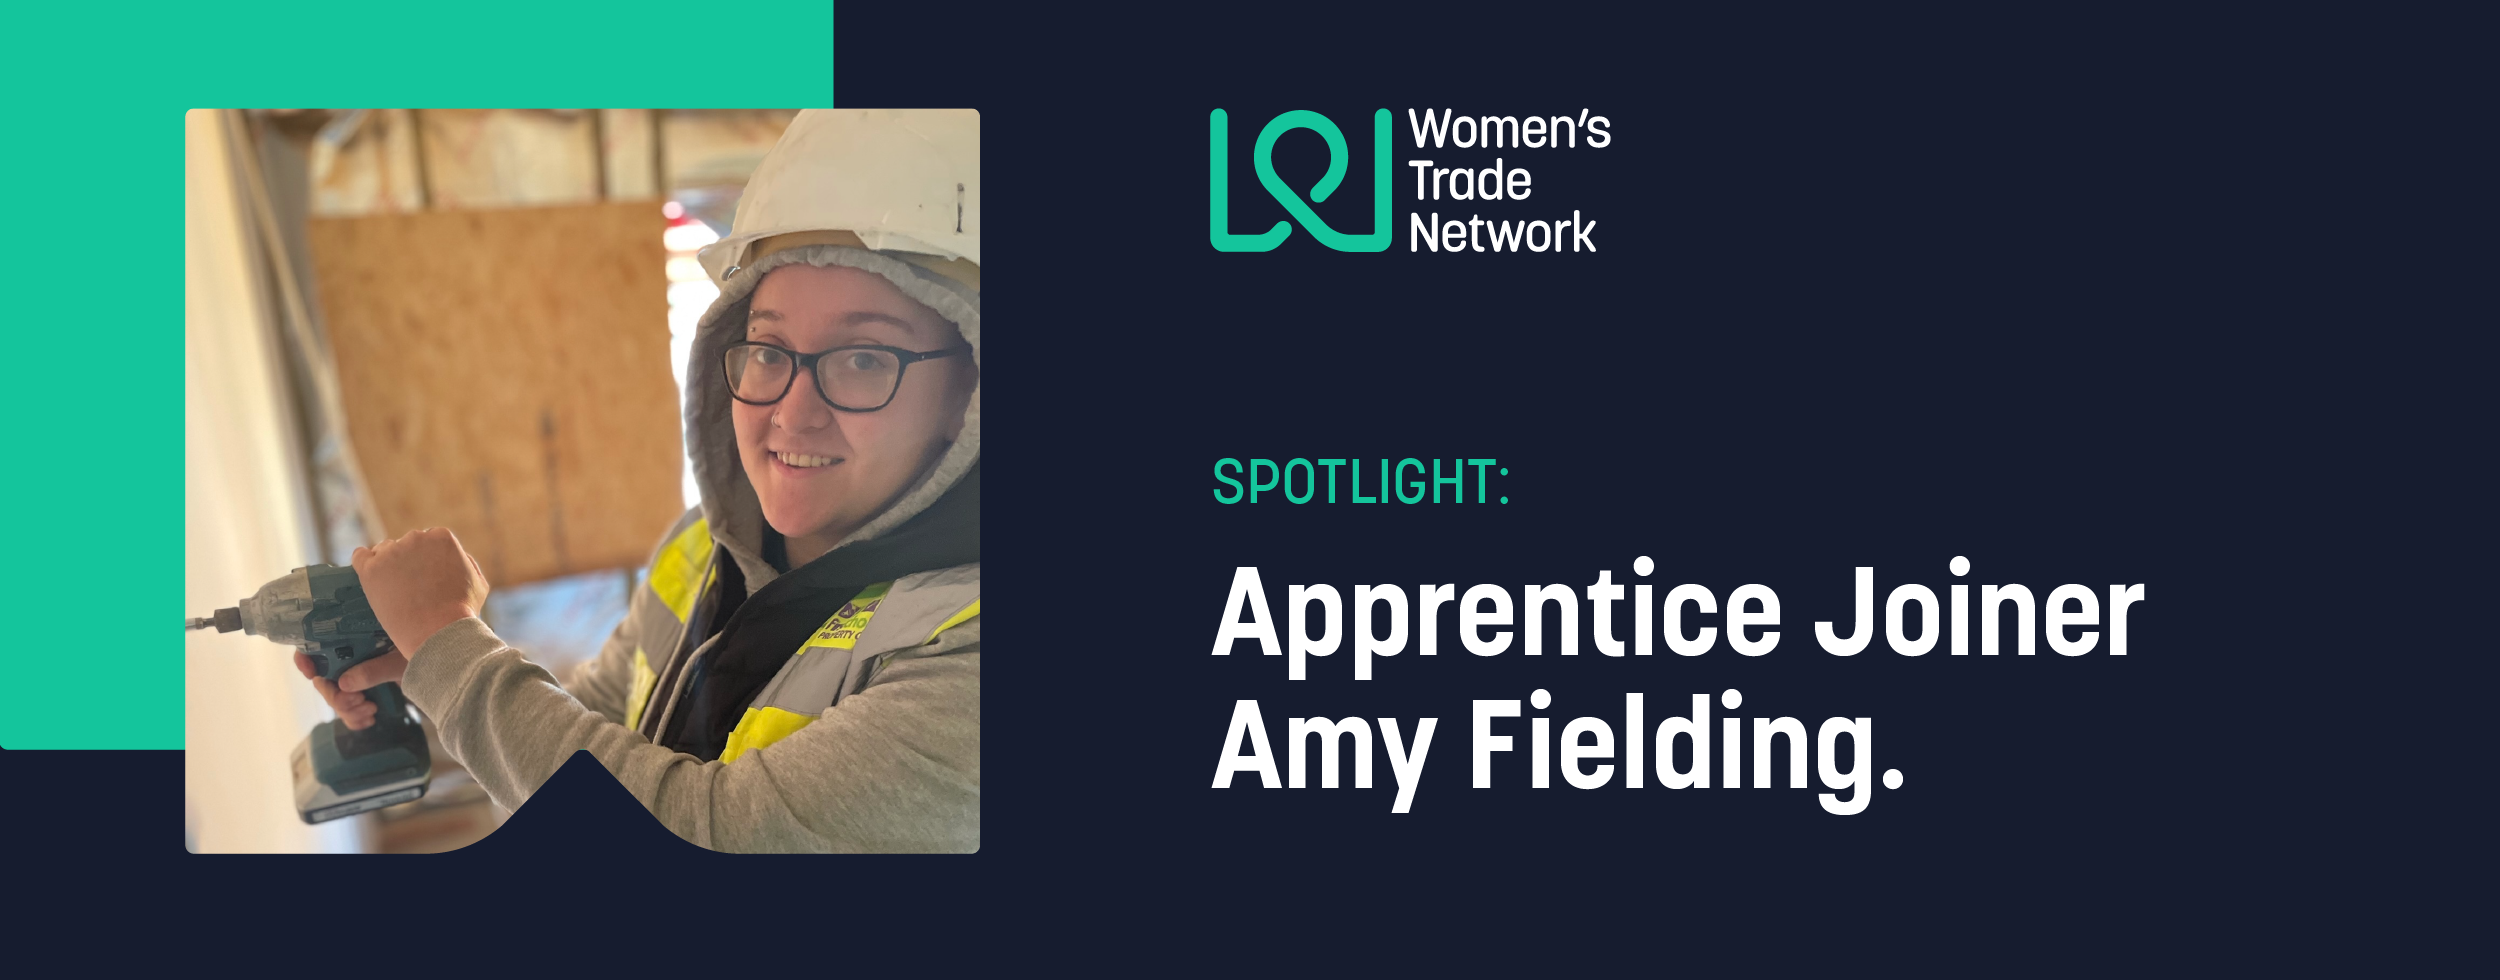 Spotlight: Apprentice Joiner Amy Fielding